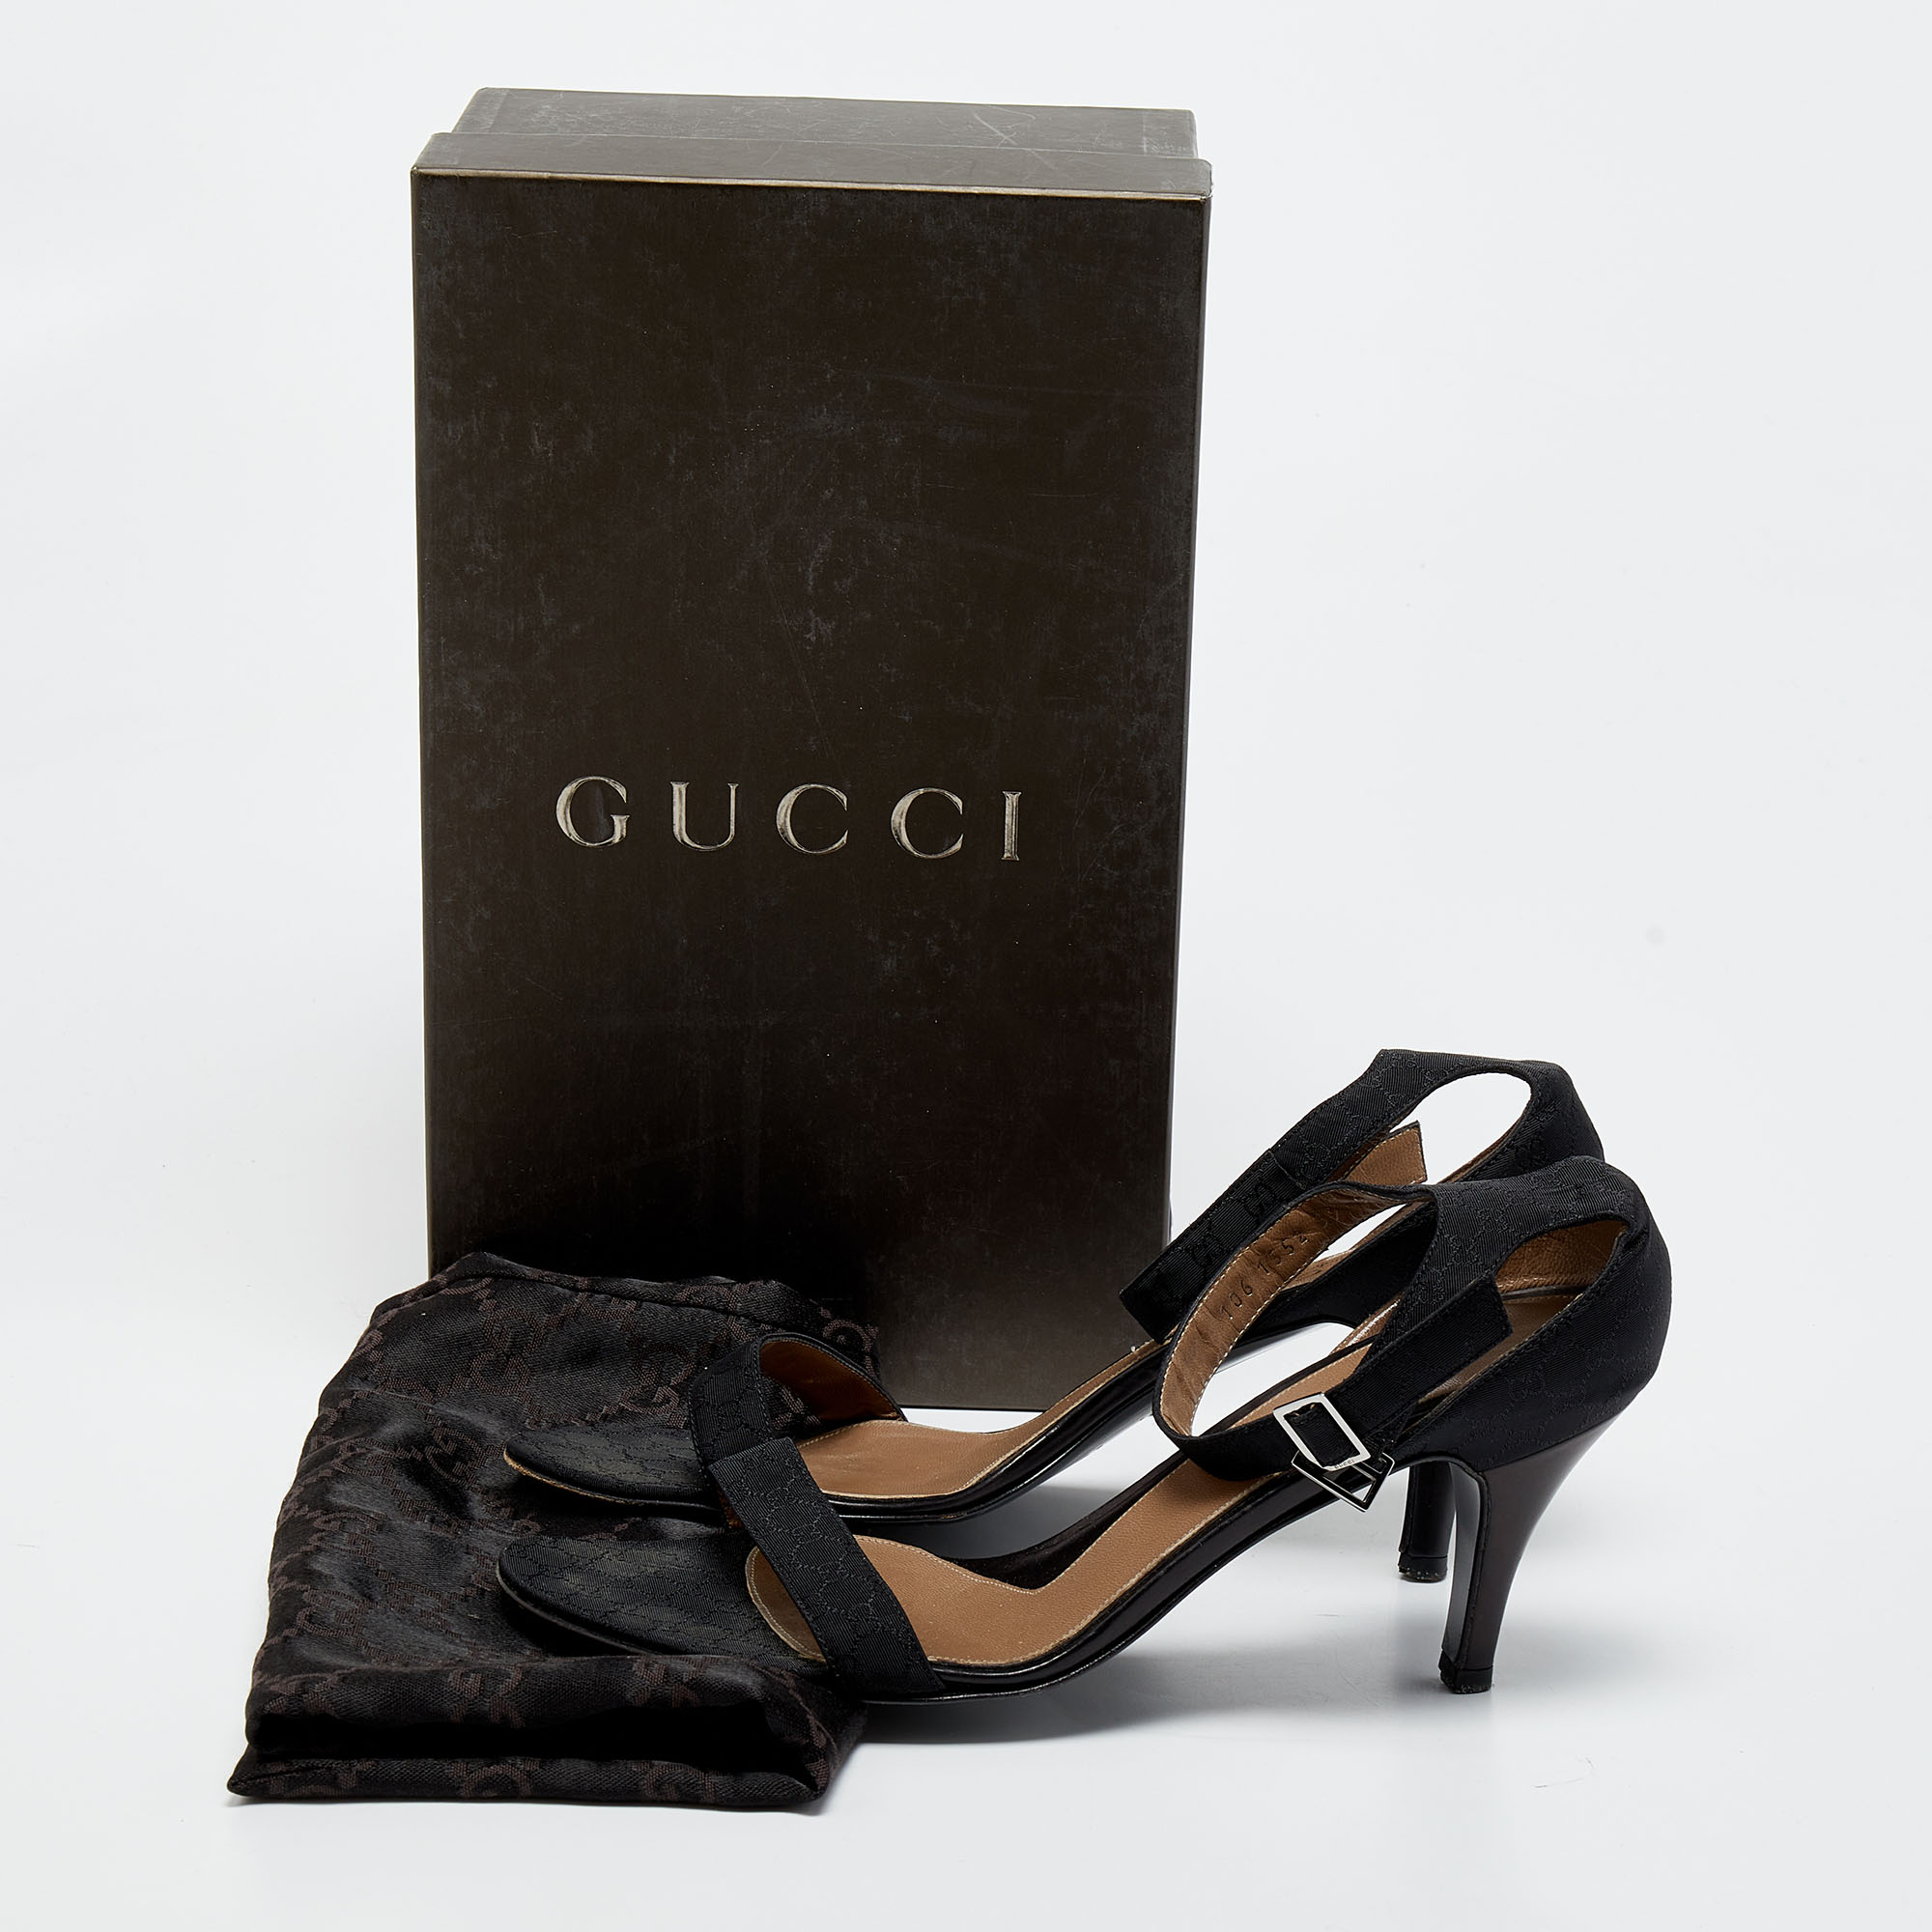 Gucci Black GG Canvas Ankle Strap Sandals Size 39